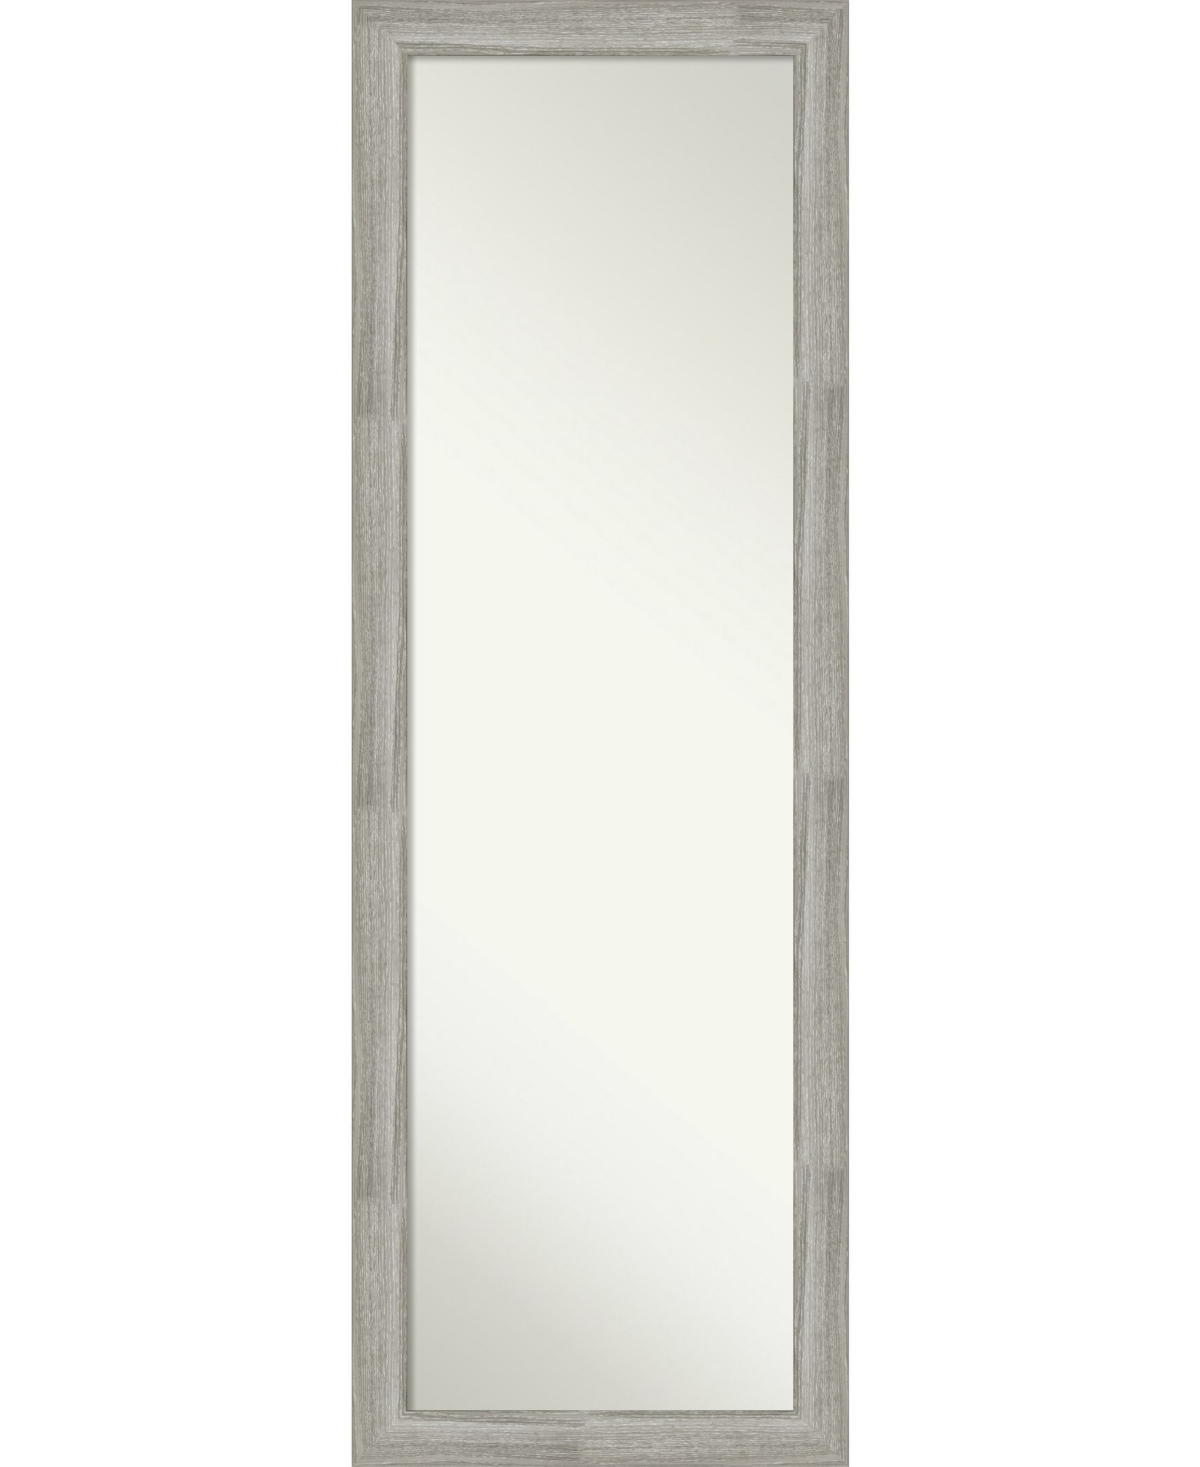 Dove on The Door Full Length Mirror, 17.5" x 51.50" - Gray